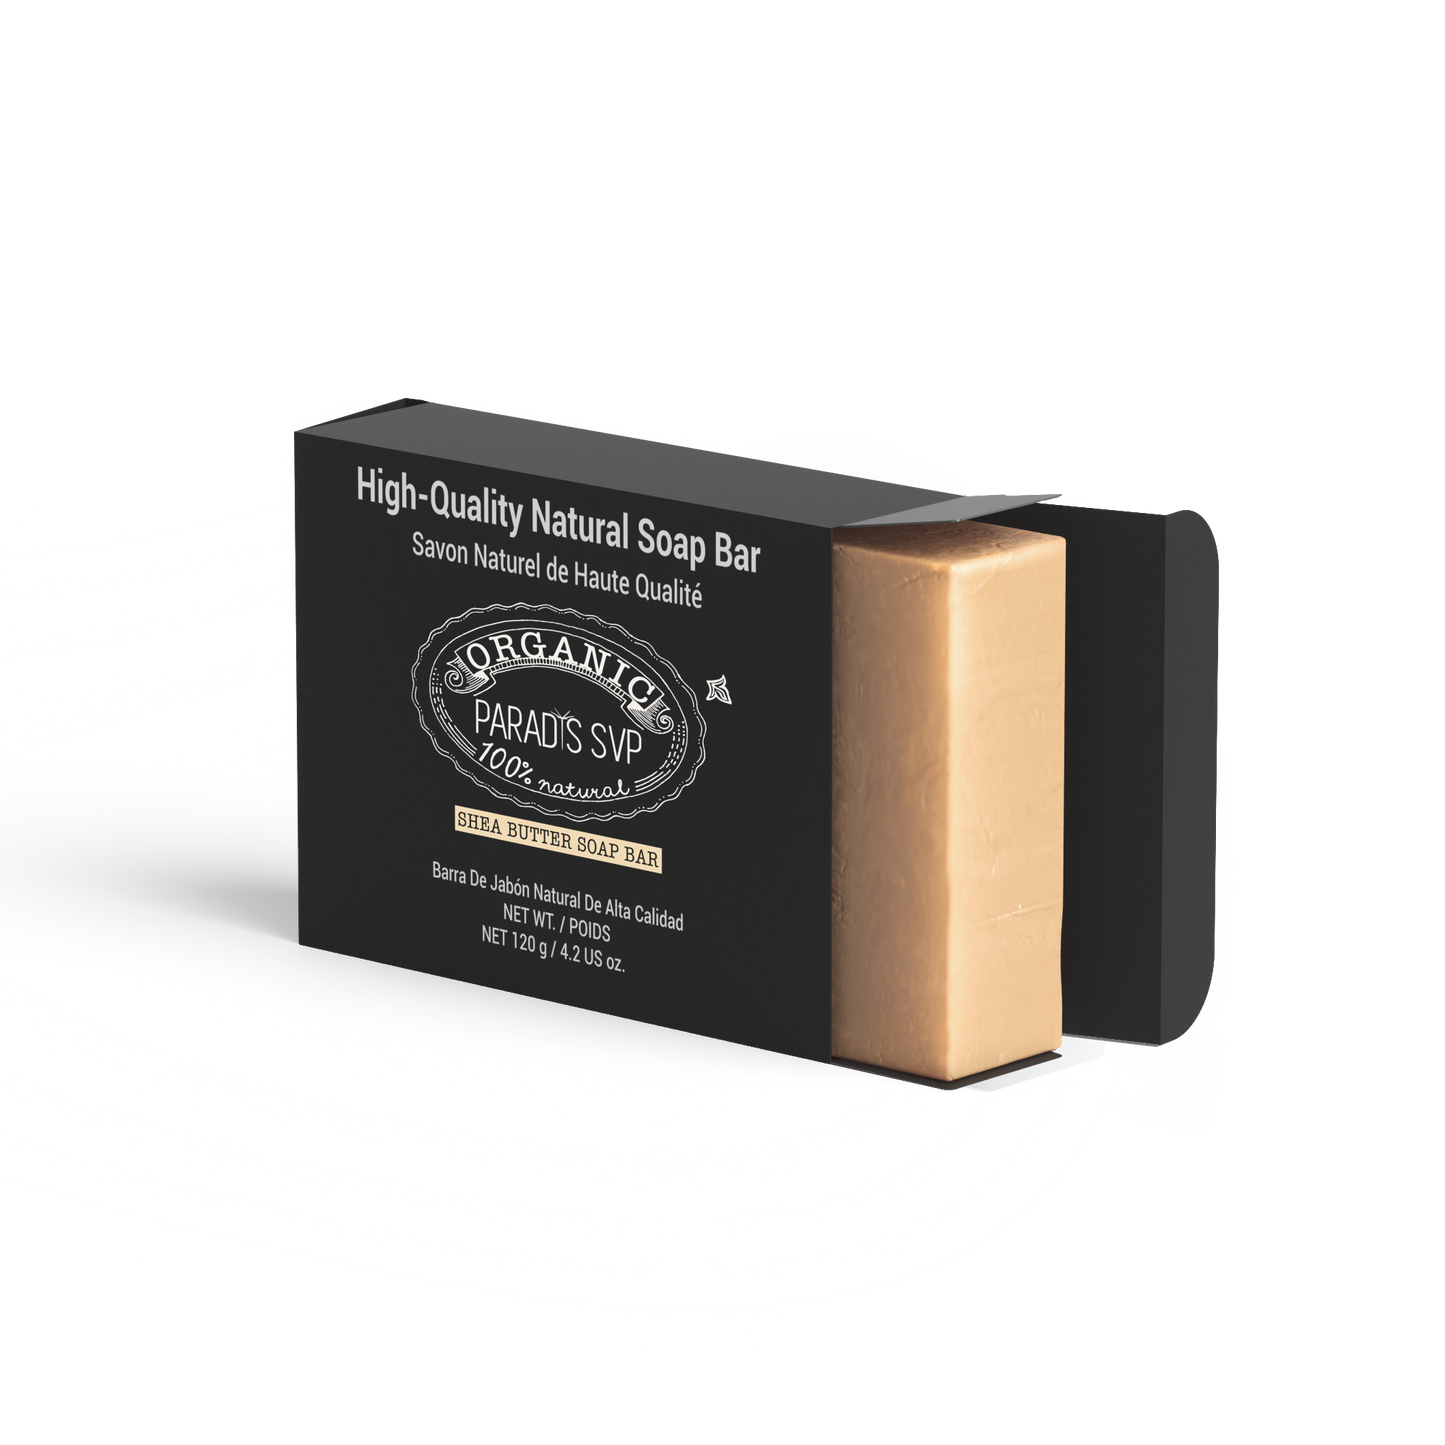 Organic Shea Butter Soap | soap-shea-butter | PARADIS SVP